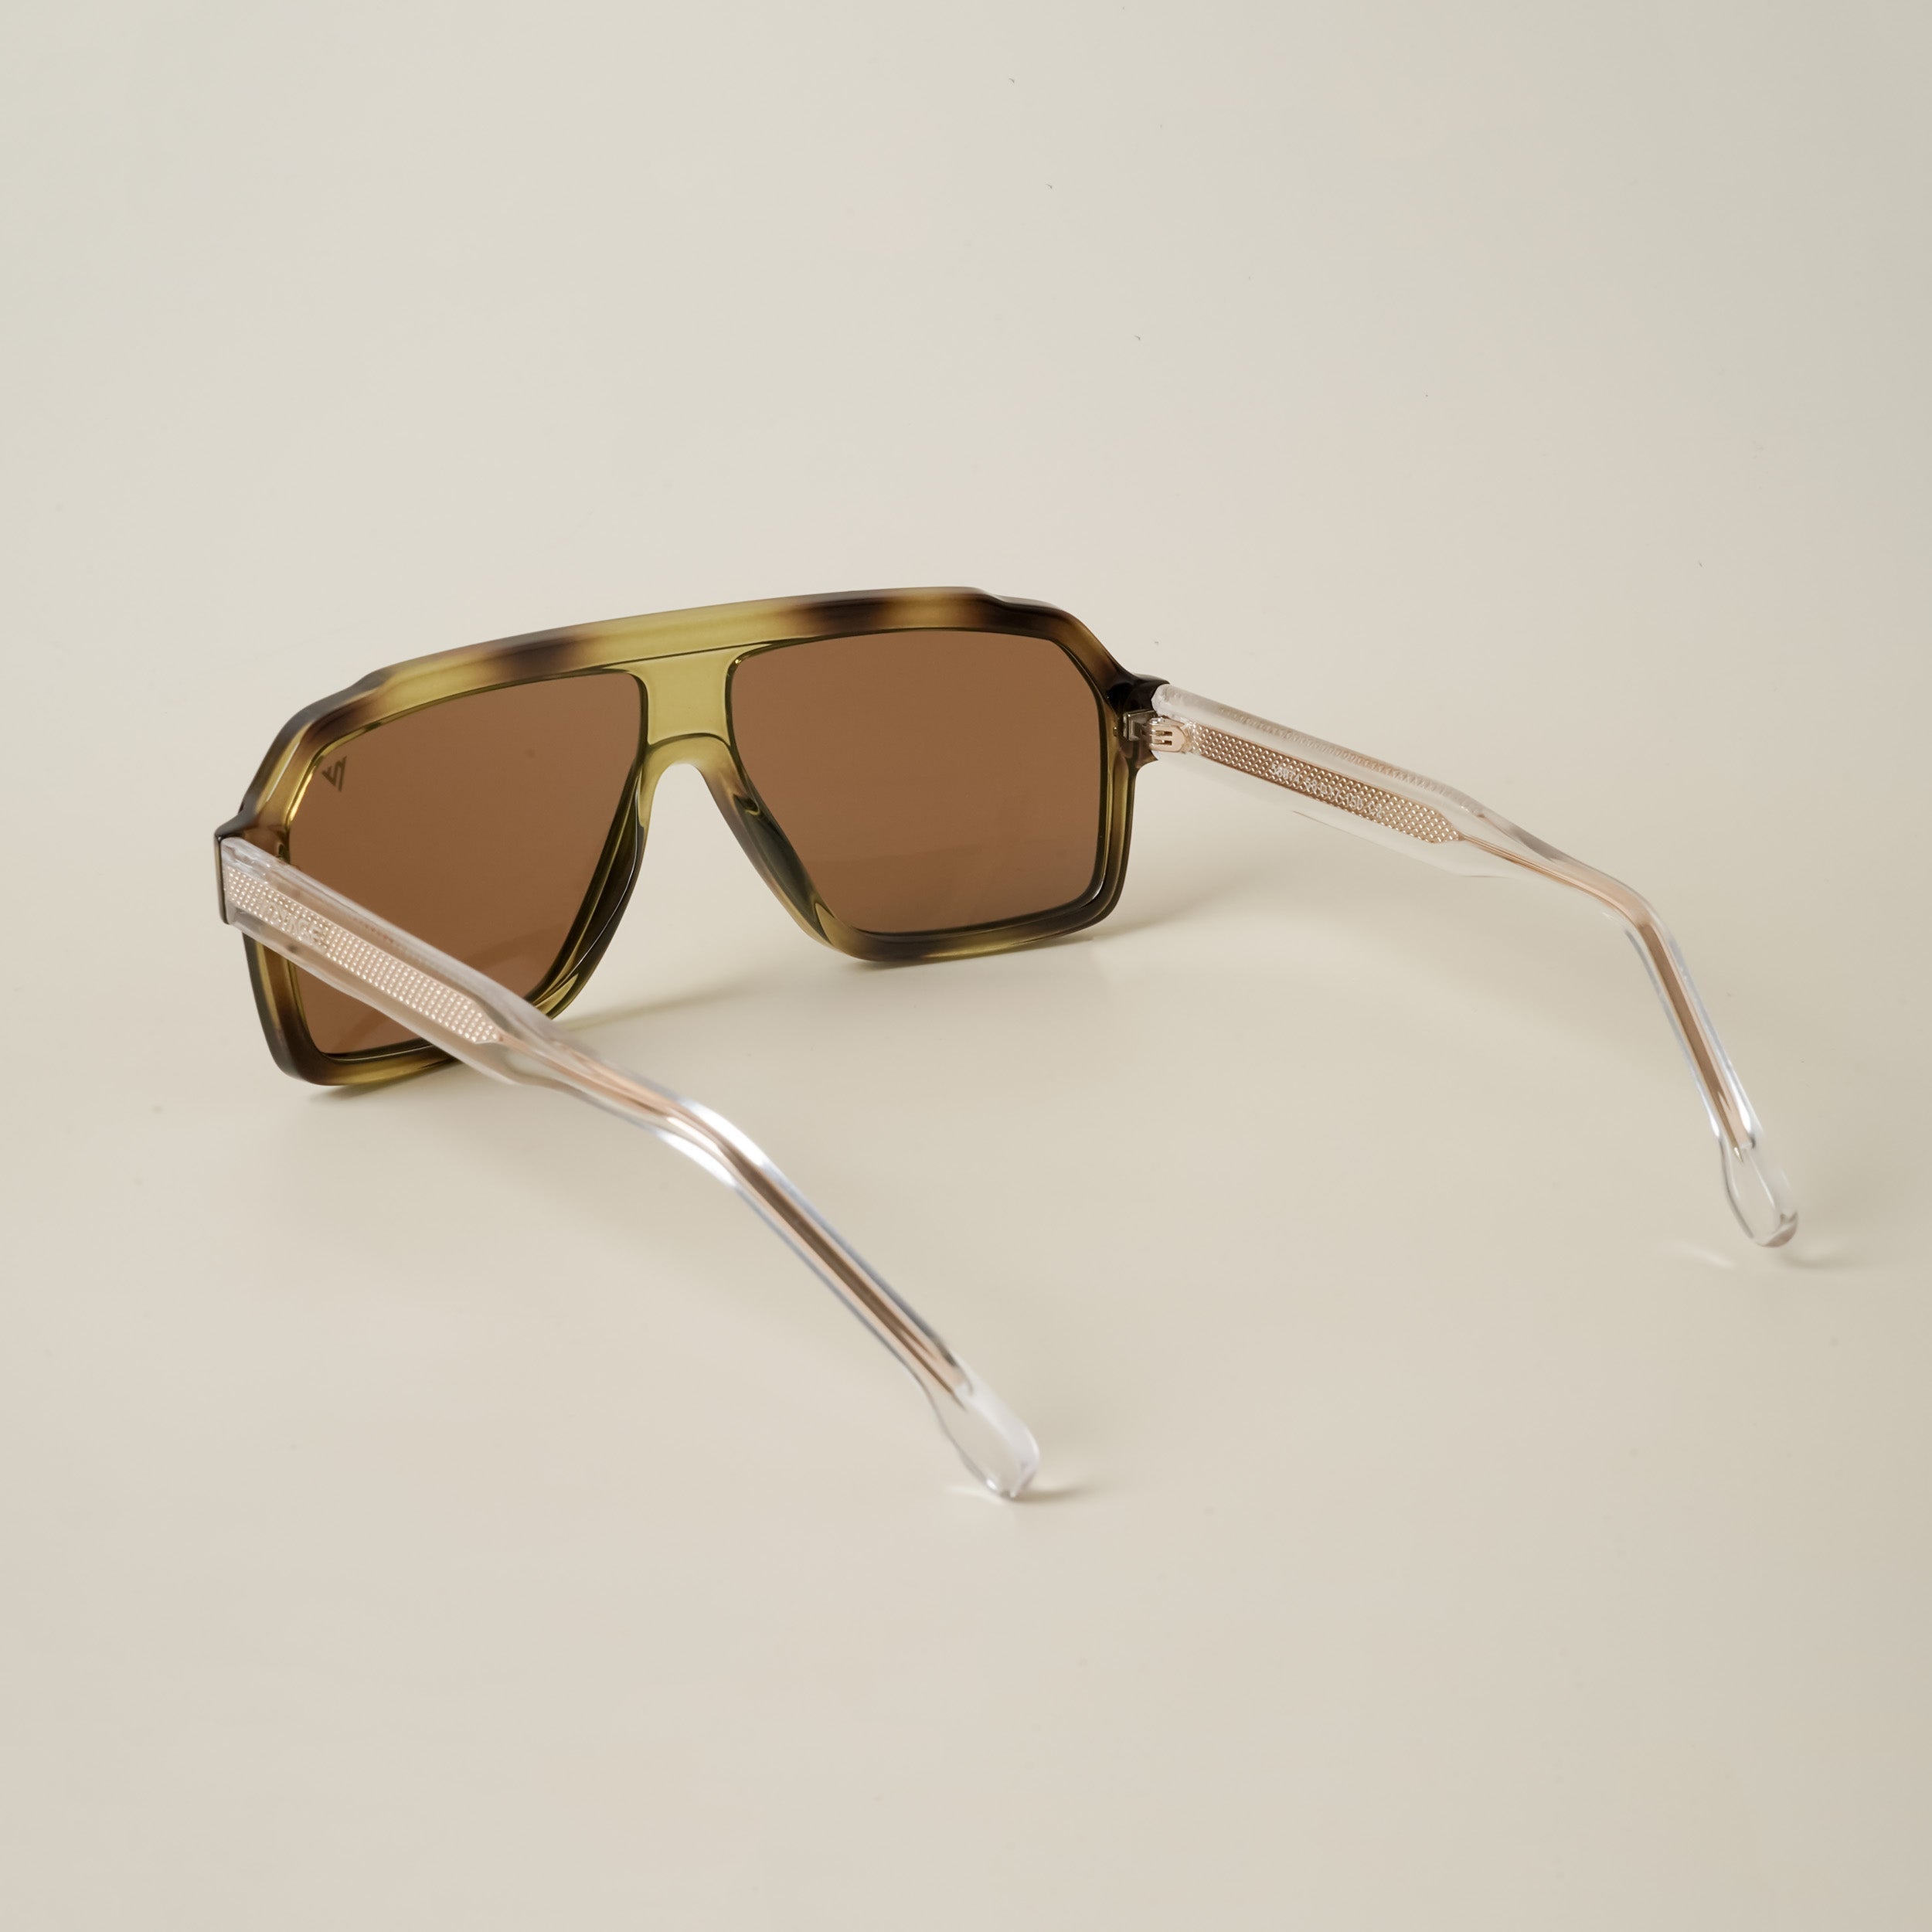 Voyage Brown Wrap Around Sunglasses for Men & Women - MG4746